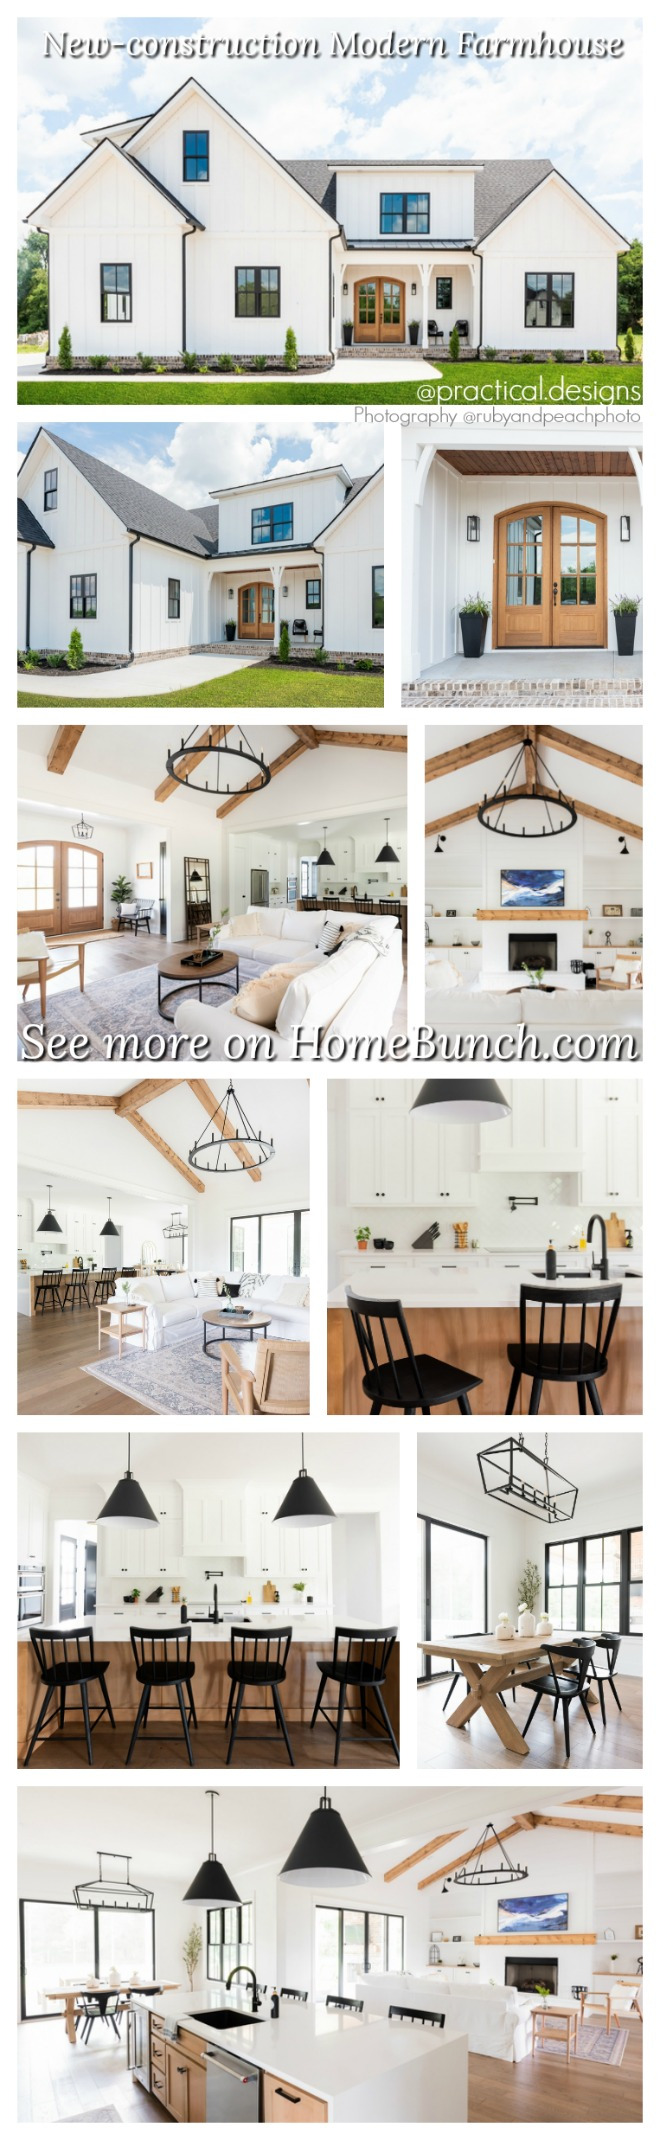 New-Construction Modern Home - Home Bunch Interior Design Ideas